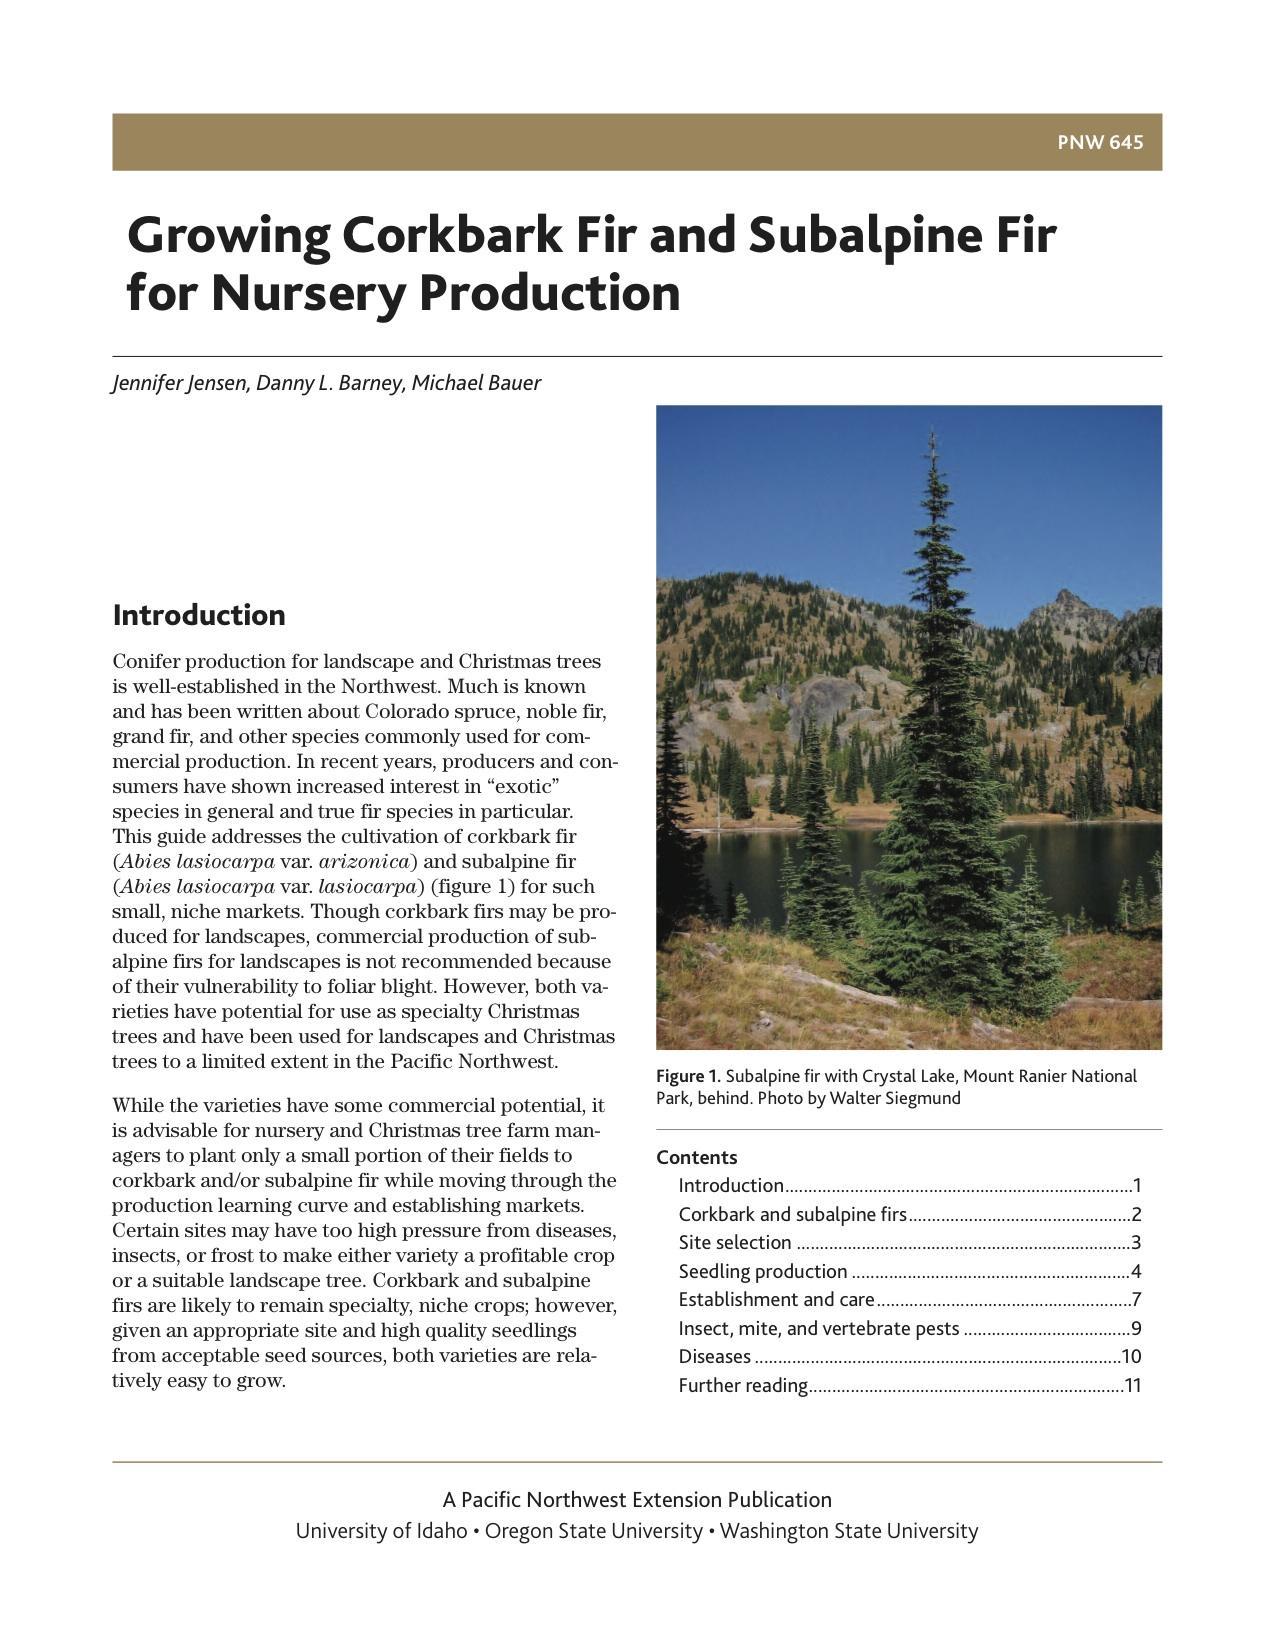 Image of Growing Corkbark Fir and Subalpine Fir for Nursery Production publication